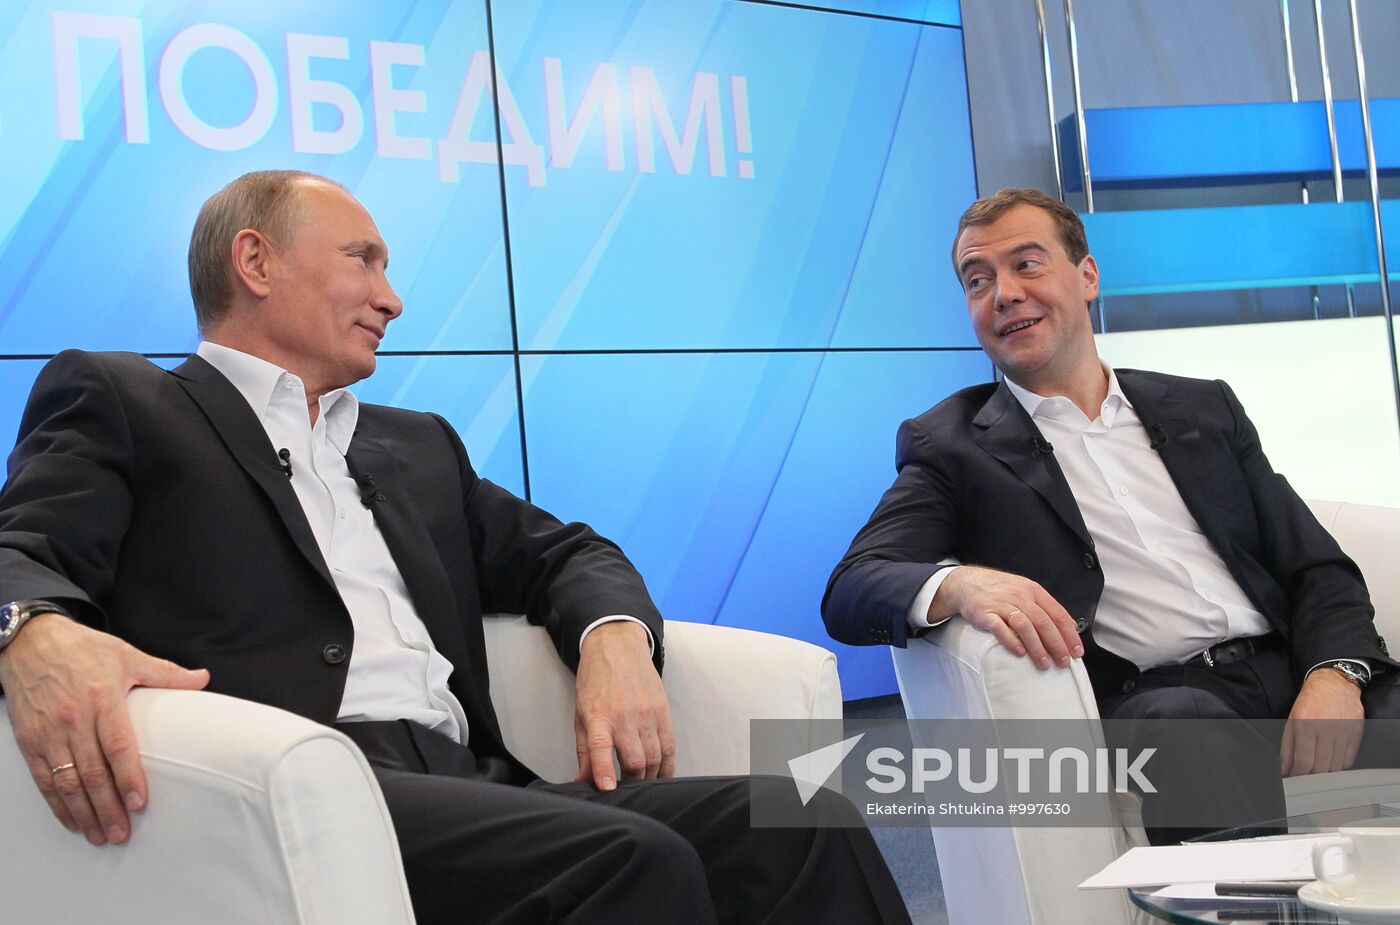 Dmitry Medvedev, Vladimir Putin meet with electors in Moscow